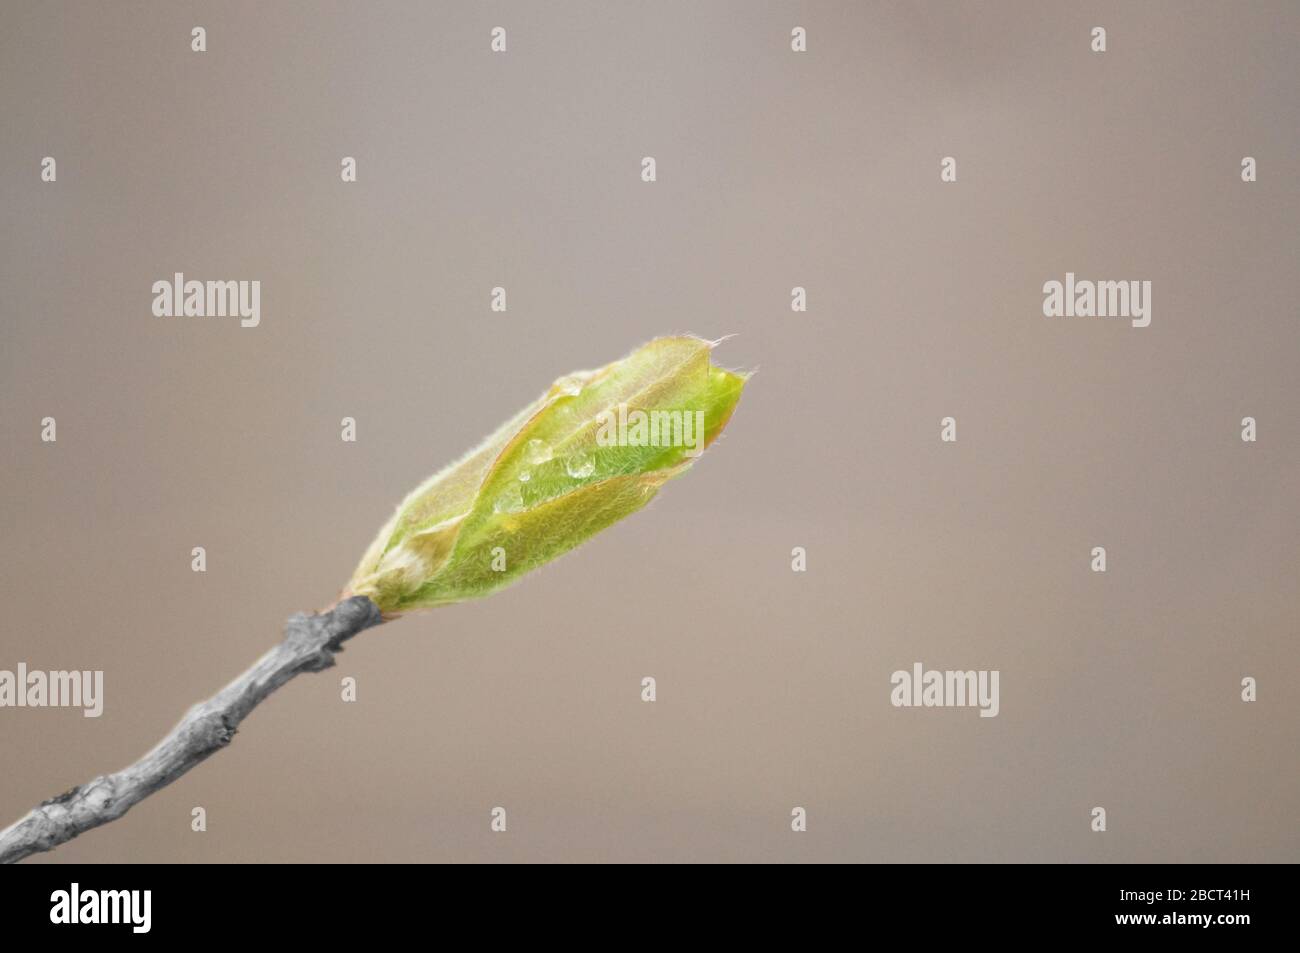 Waterdrop on leaf Stock Photo